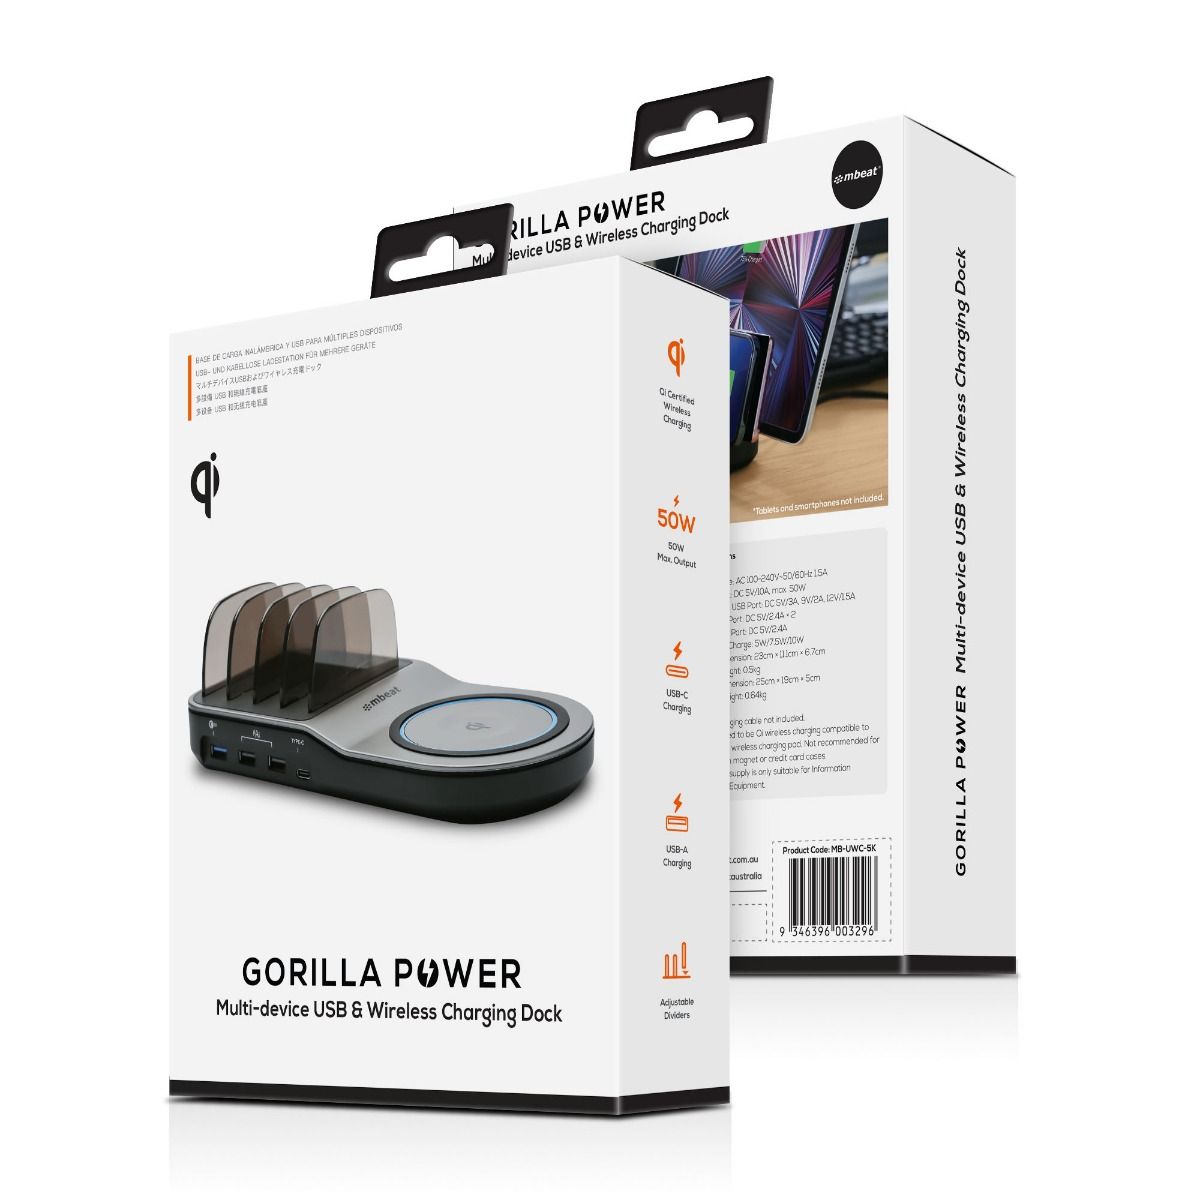 mbeat Gorilla Power 50W Qi Certified Multi-Device USB & Wireless Charging Dock